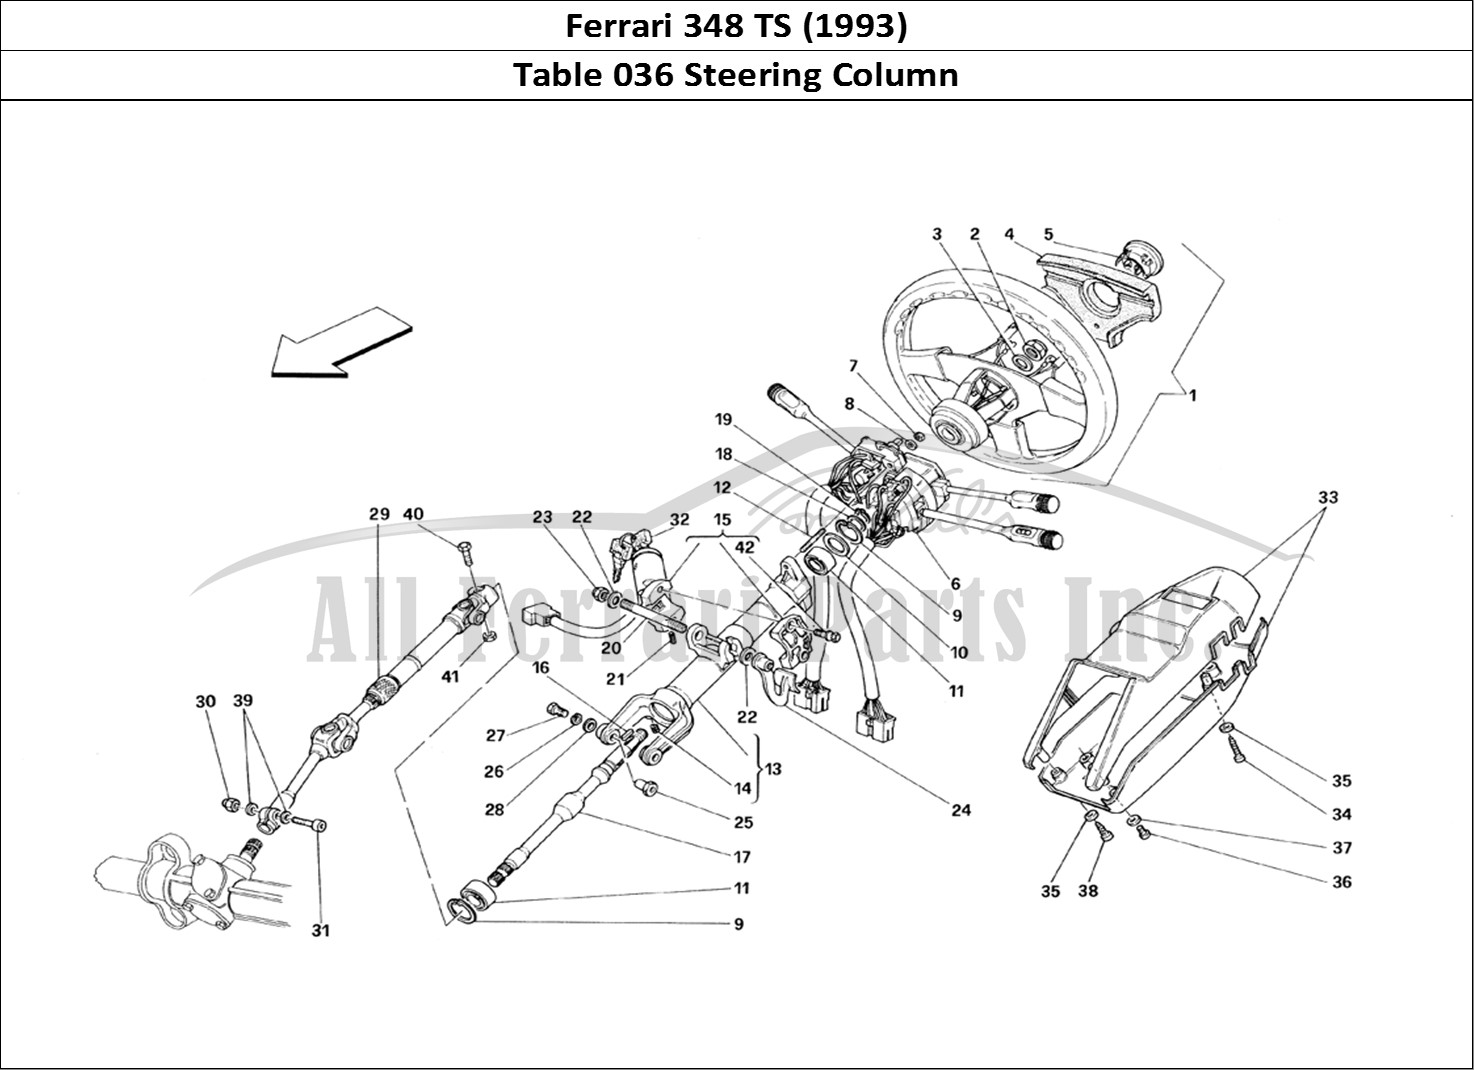 Ferrari Parts Ferrari 348 TB (1993) Page 036 Steering Column